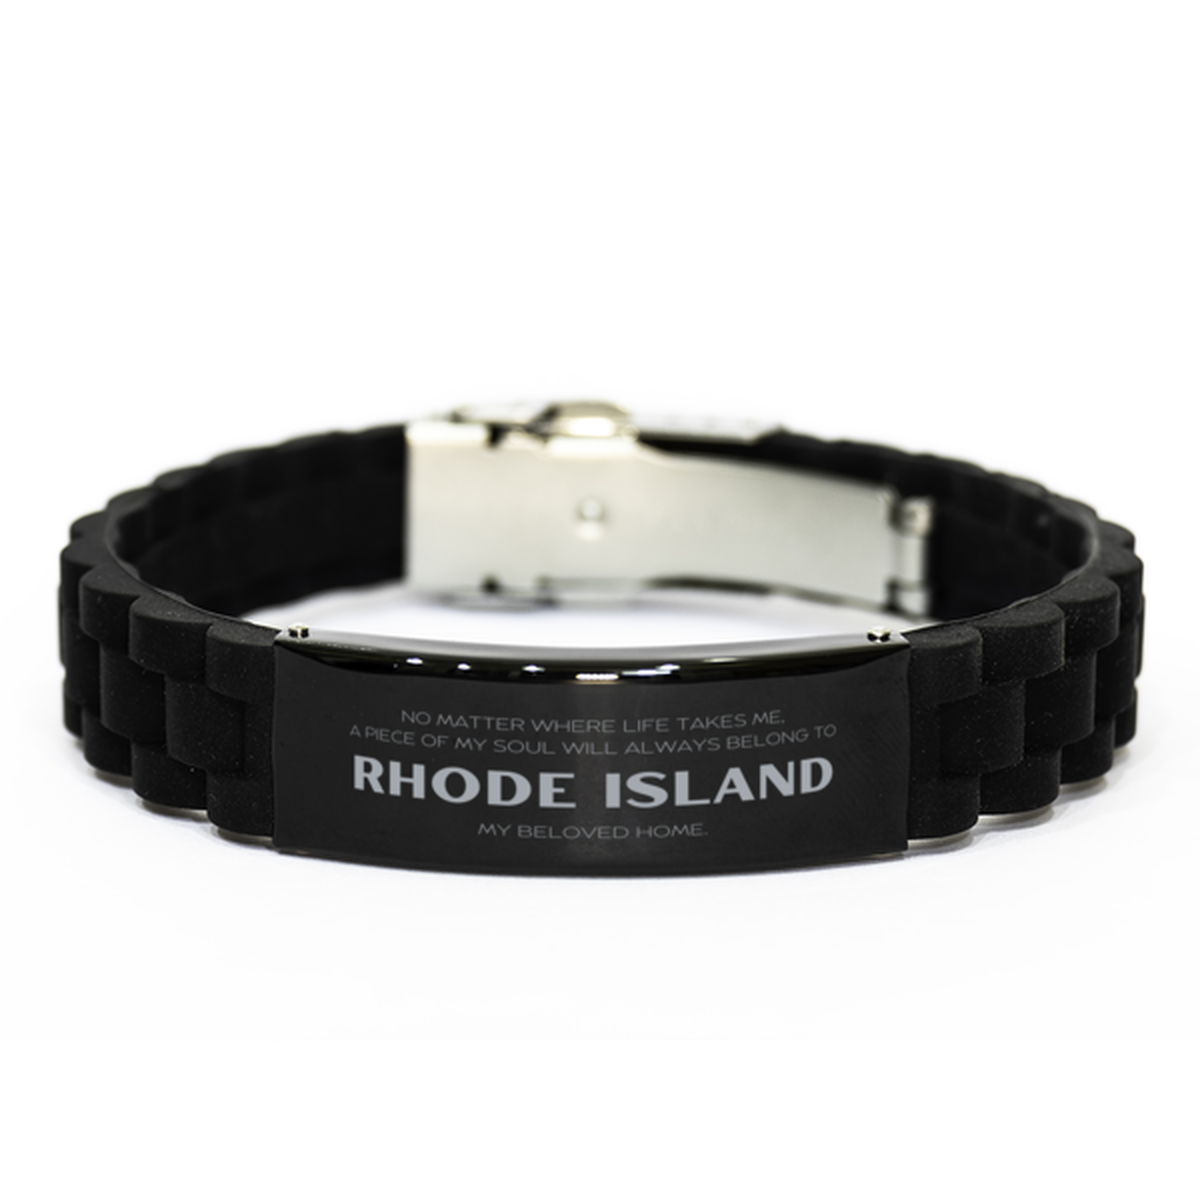 Love Rhode Island State Gifts, My soul will always belong to Rhode Island, Proud Black Glidelock Clasp Bracelet, Birthday Unique Gifts For Rhode Island Men, Women, Friends